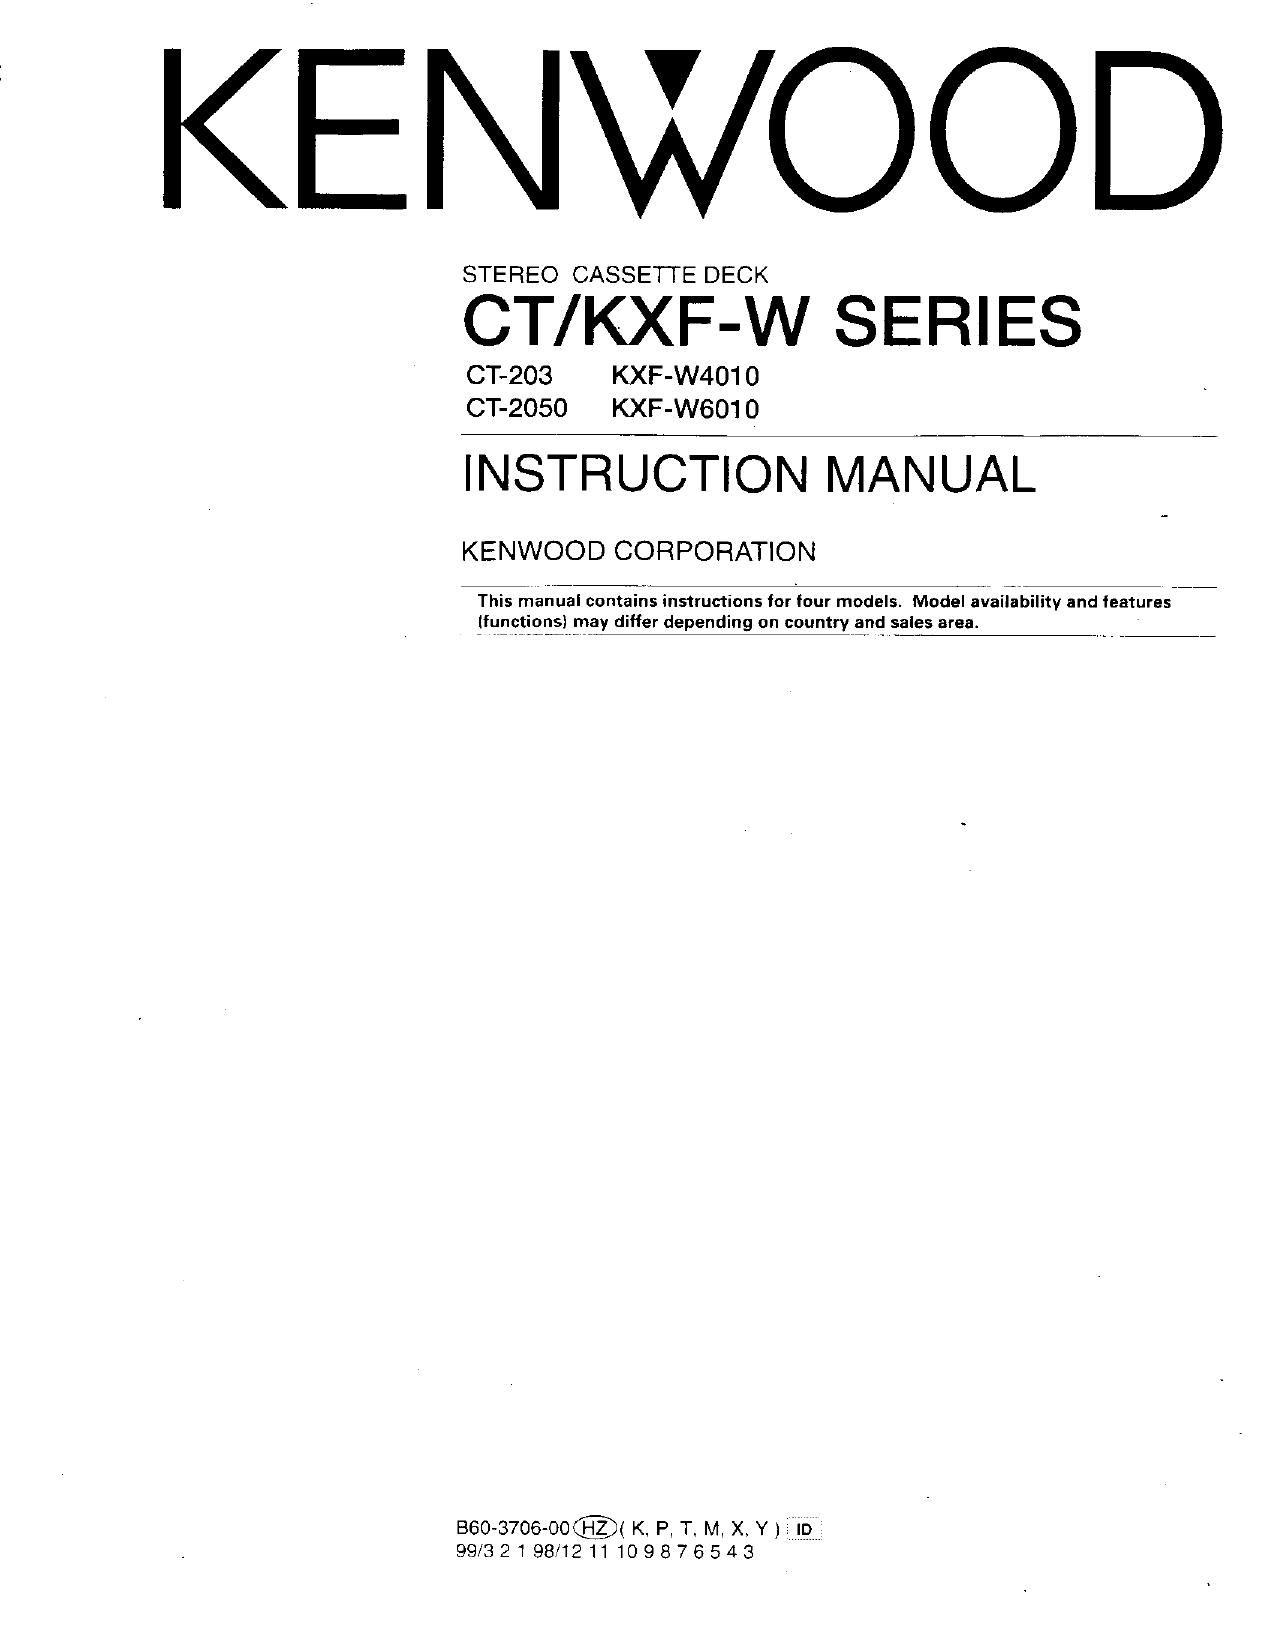 Kenwood CT 203 Owners Manual